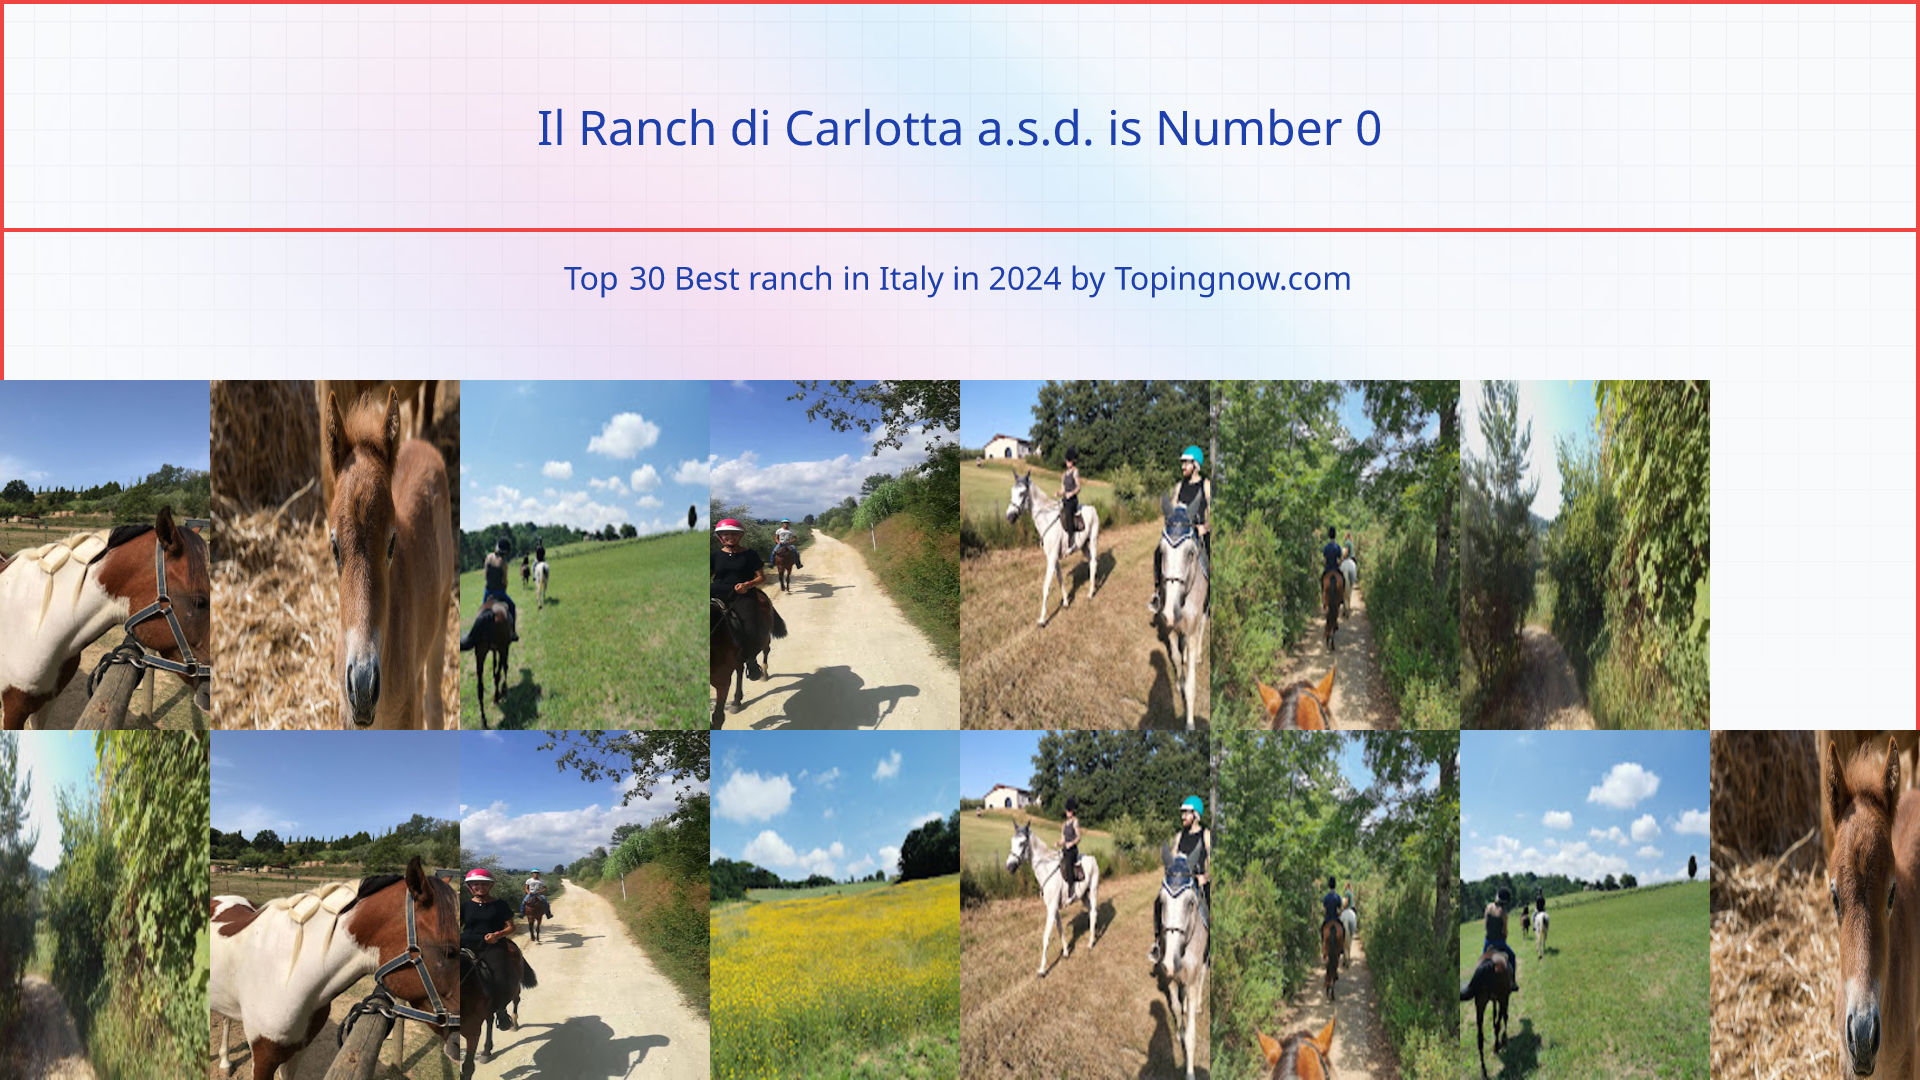 Il Ranch di Carlotta a.s.d.: Top 30 Best ranch in Italy in 2024